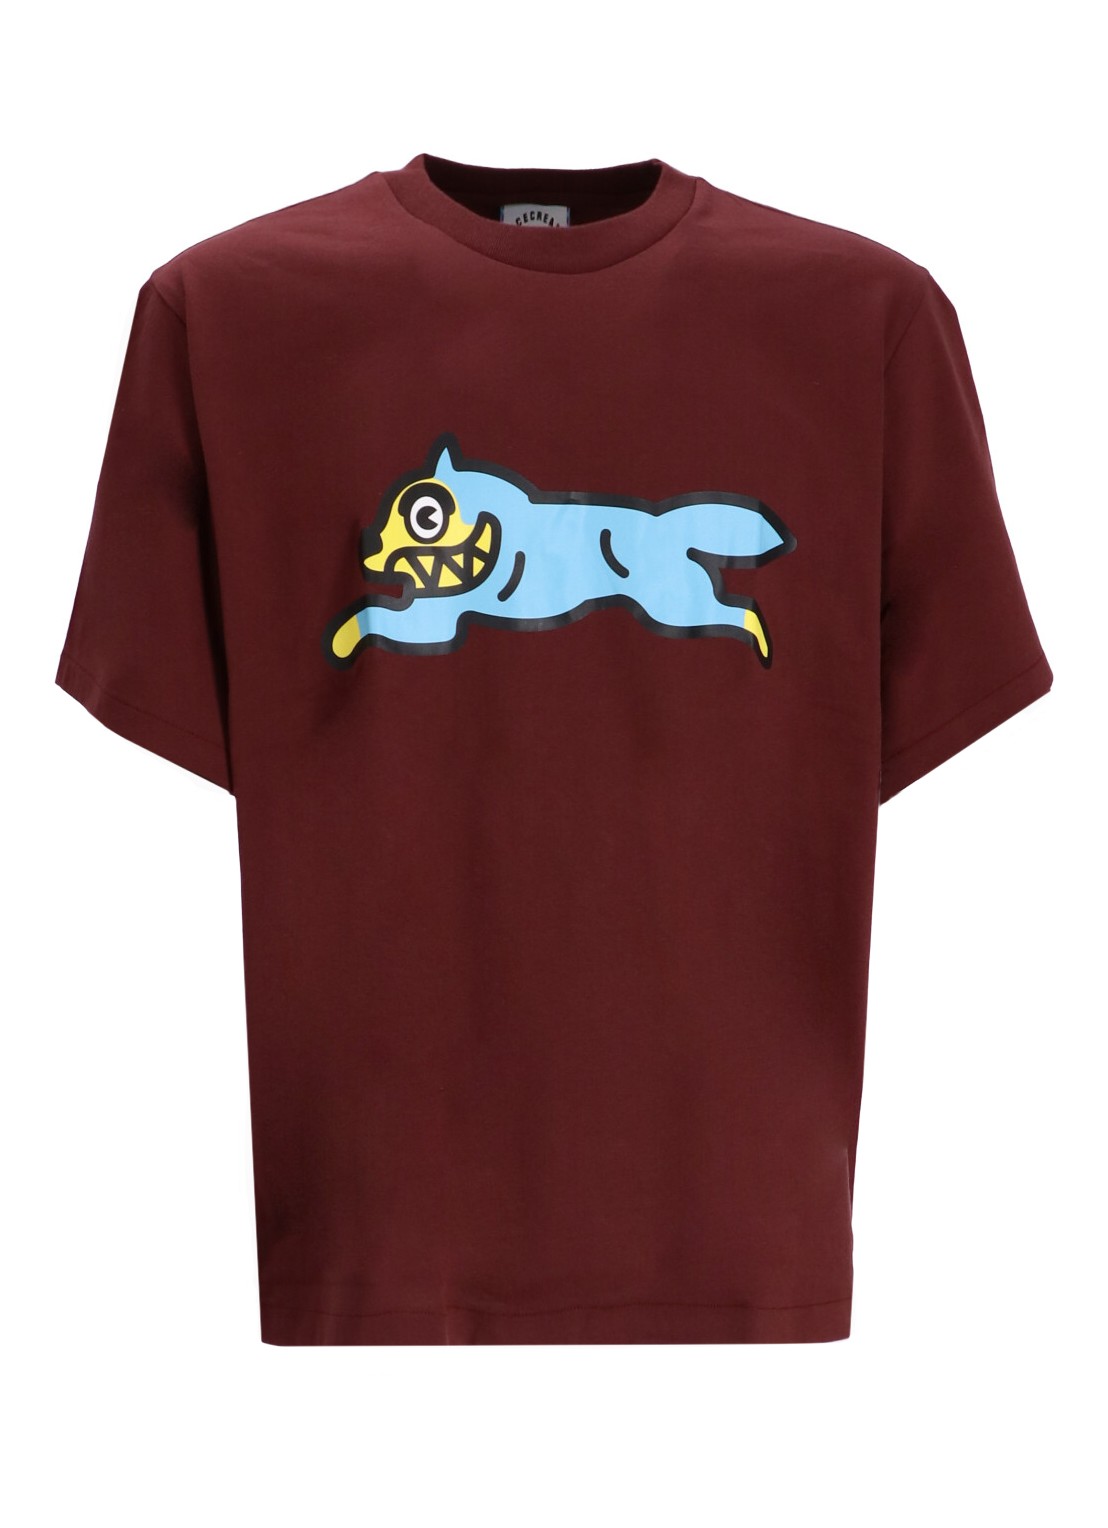 Camiseta icecream t-shirt manrunning dog t-shirt - ic24236 brown talla L
 